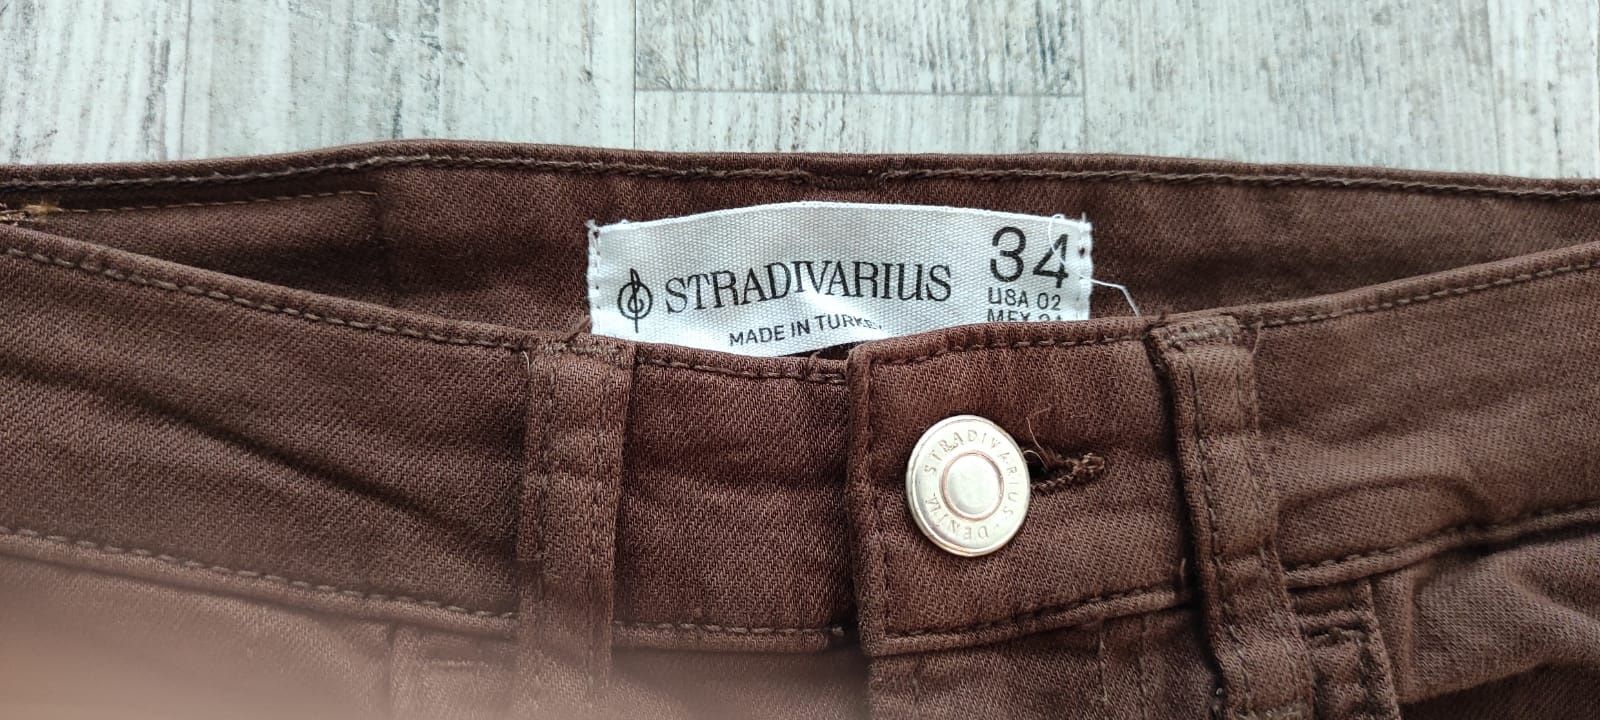 Spodnie jeans brązowe Stradivarius